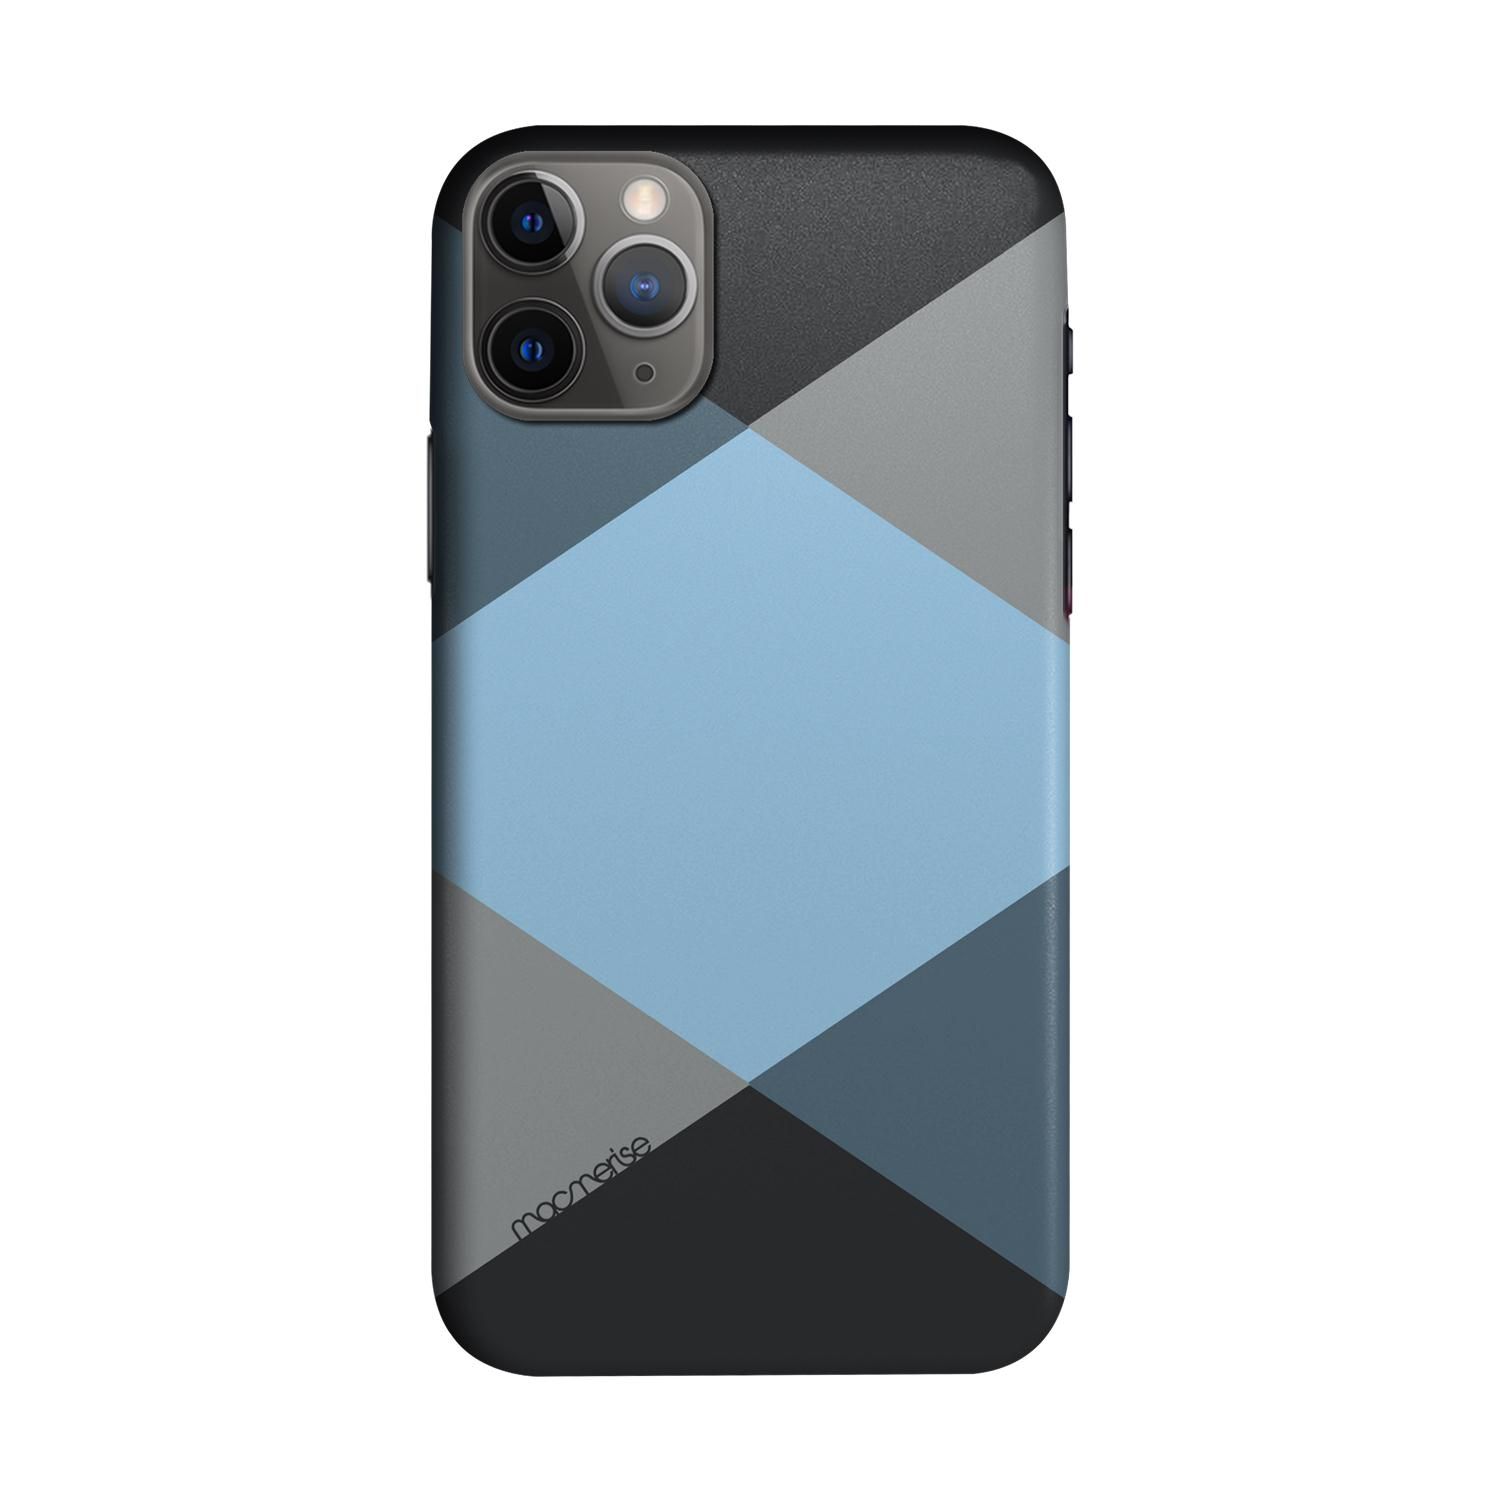 Buy Criss Cross Blugrey - Sleek Phone Case for iPhone 11 Pro Max Online